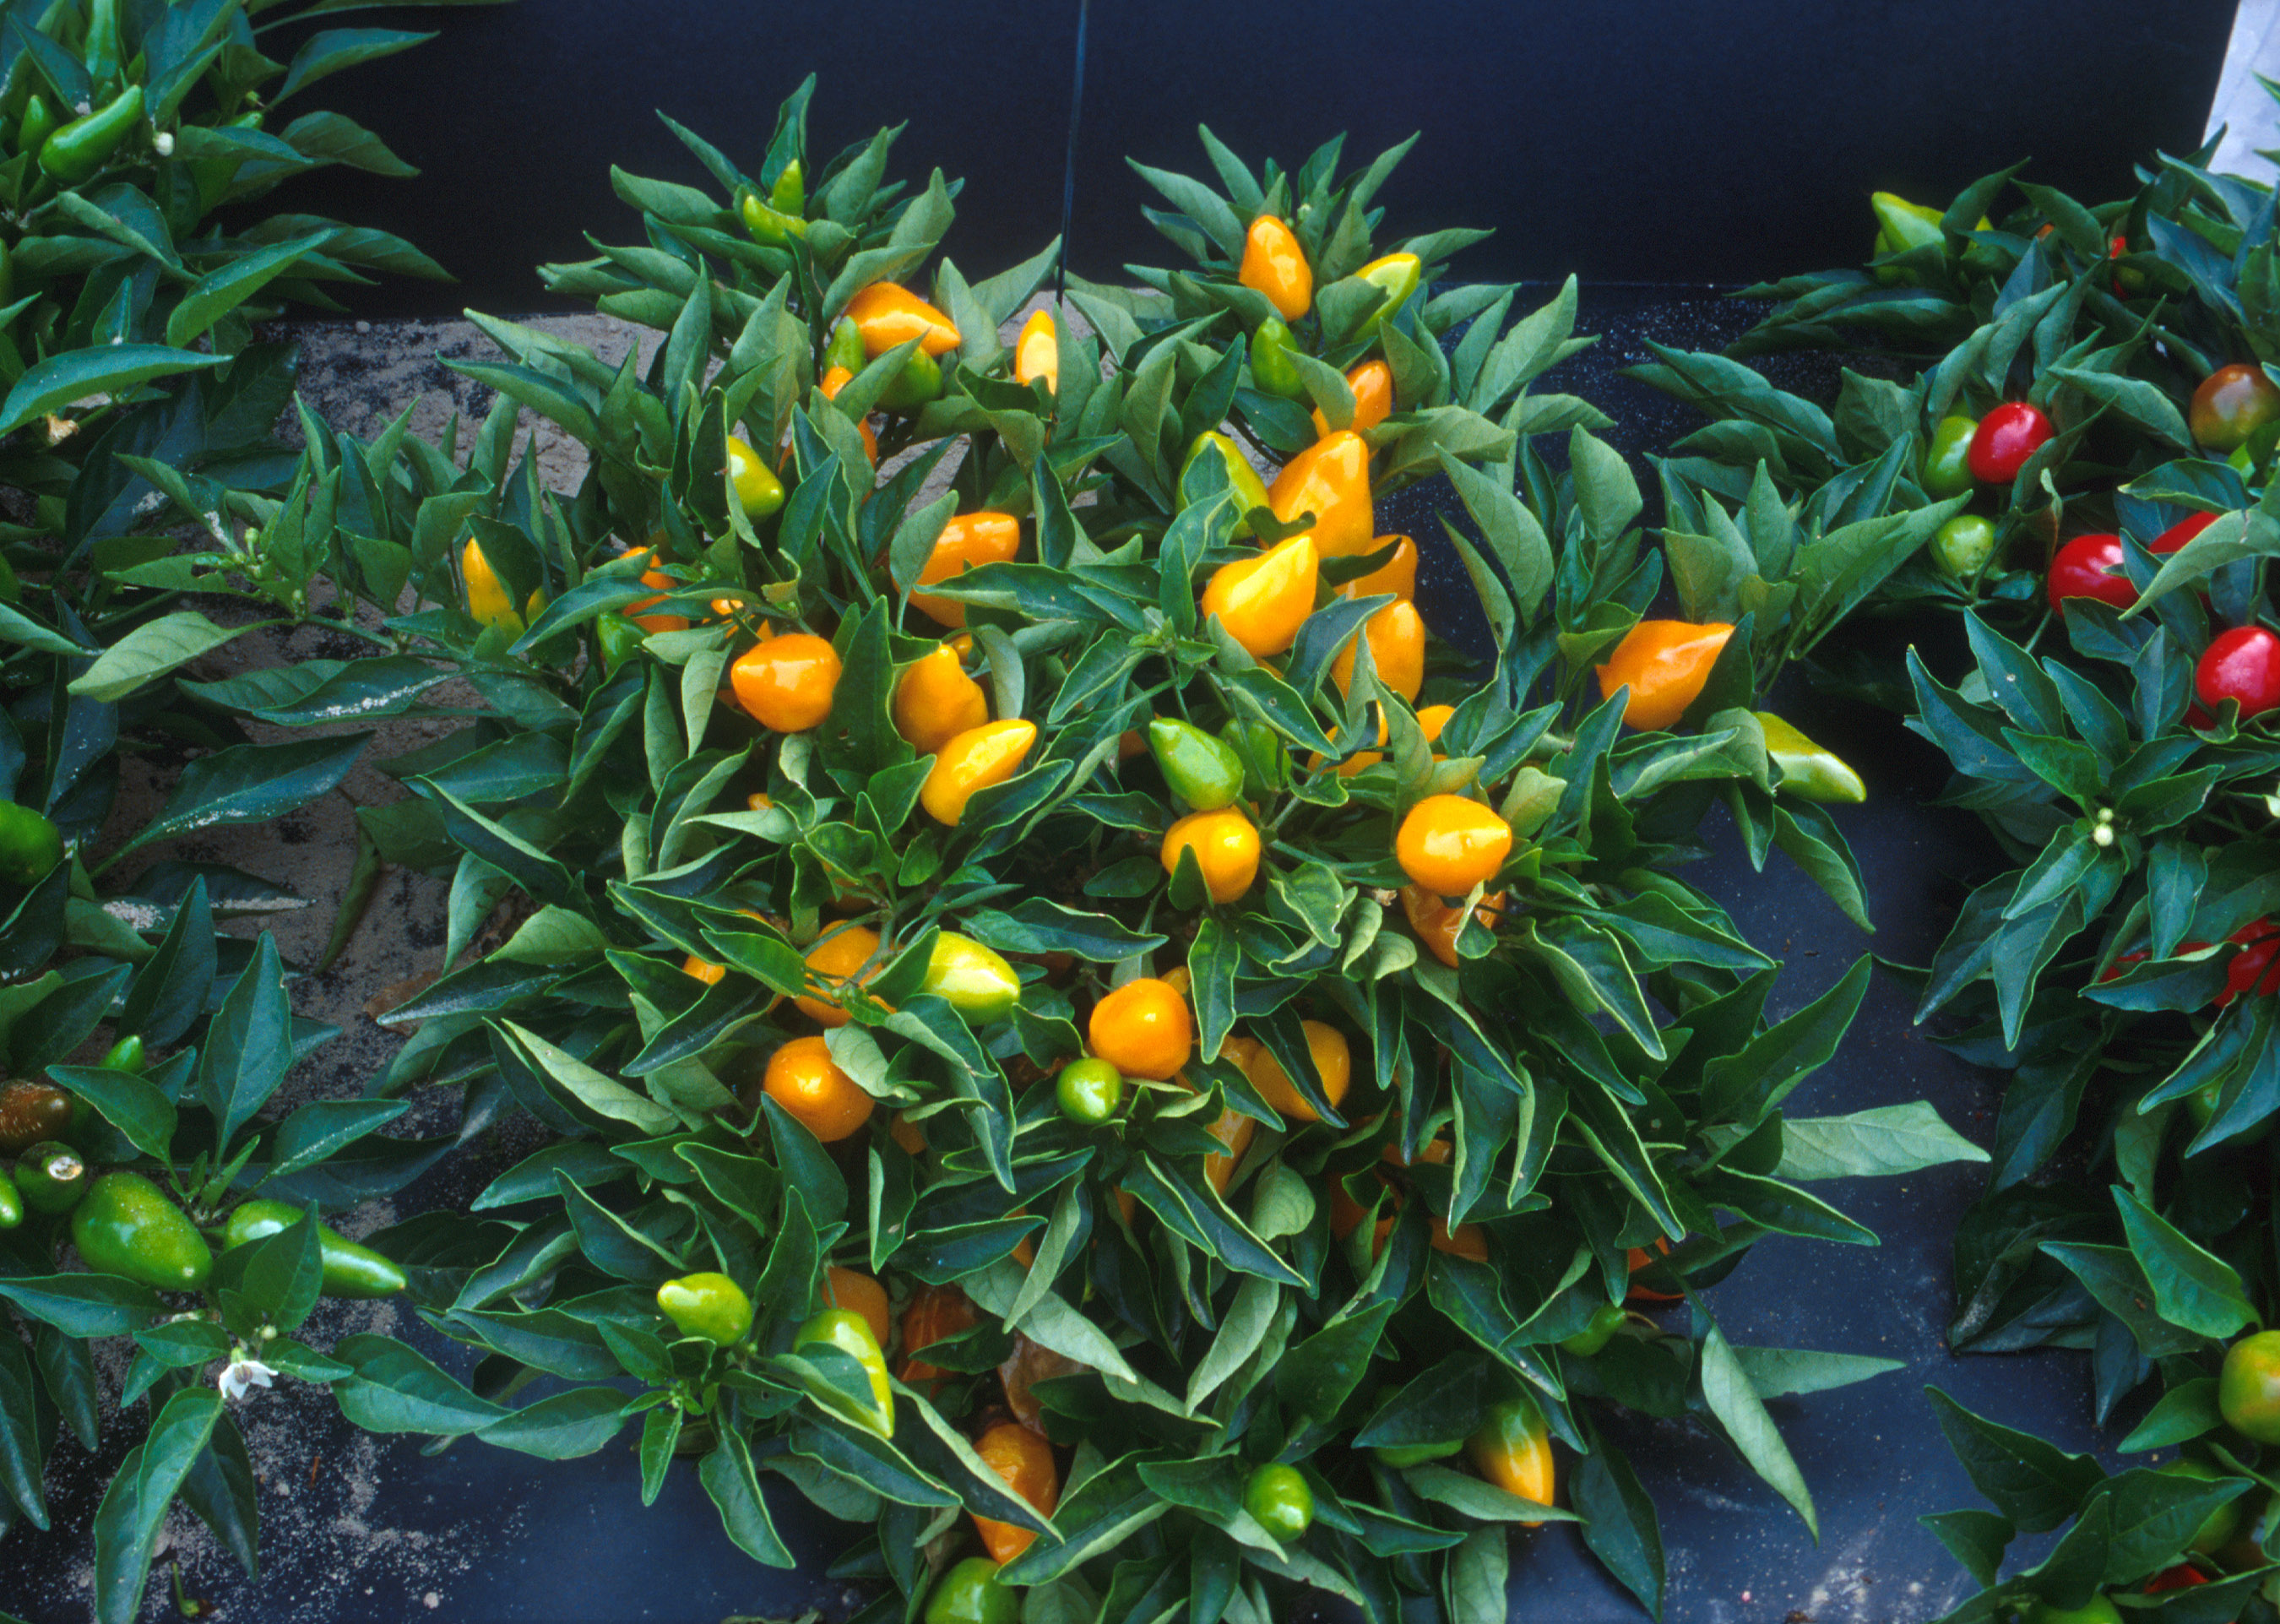 File:Compact orange pepper plants.jpg - Wikimedia Commons